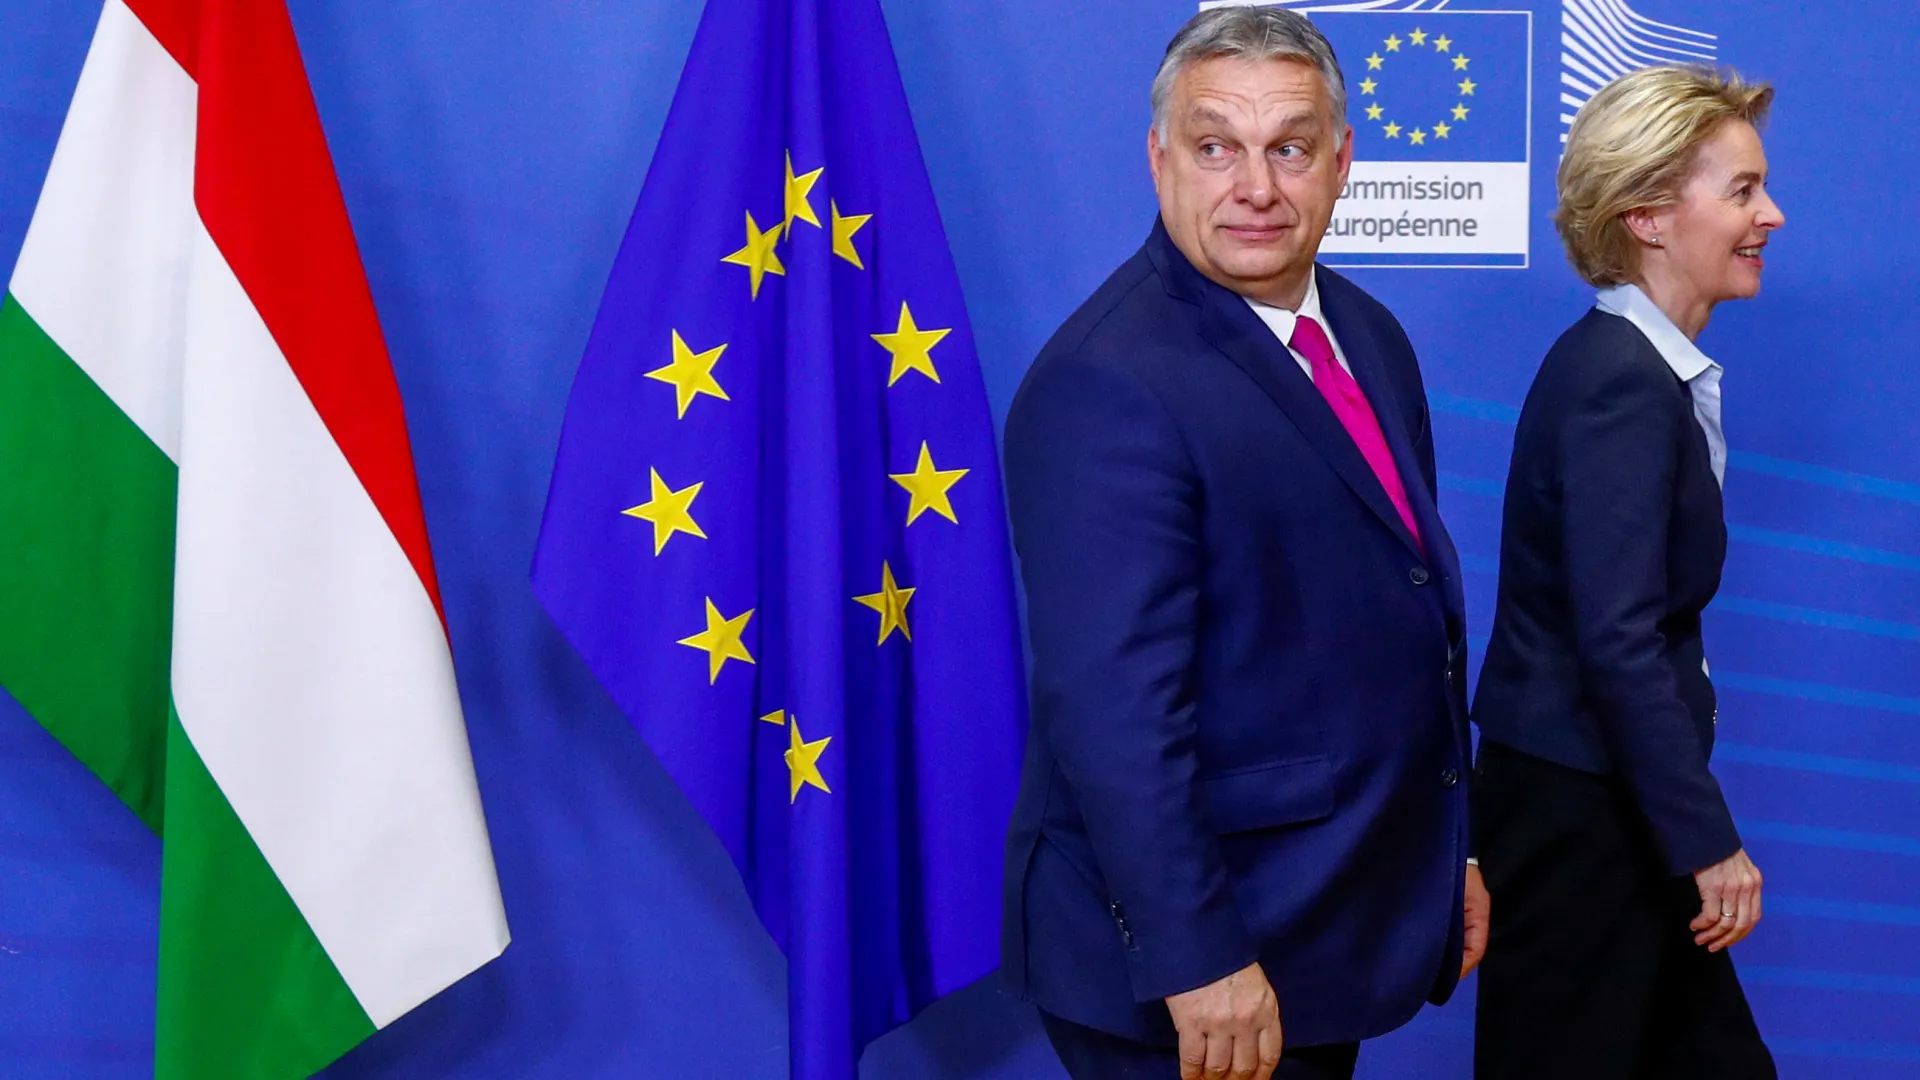 Hungary signals openness to EU budget for €50 billion aid (Credits: Al Jazeera)